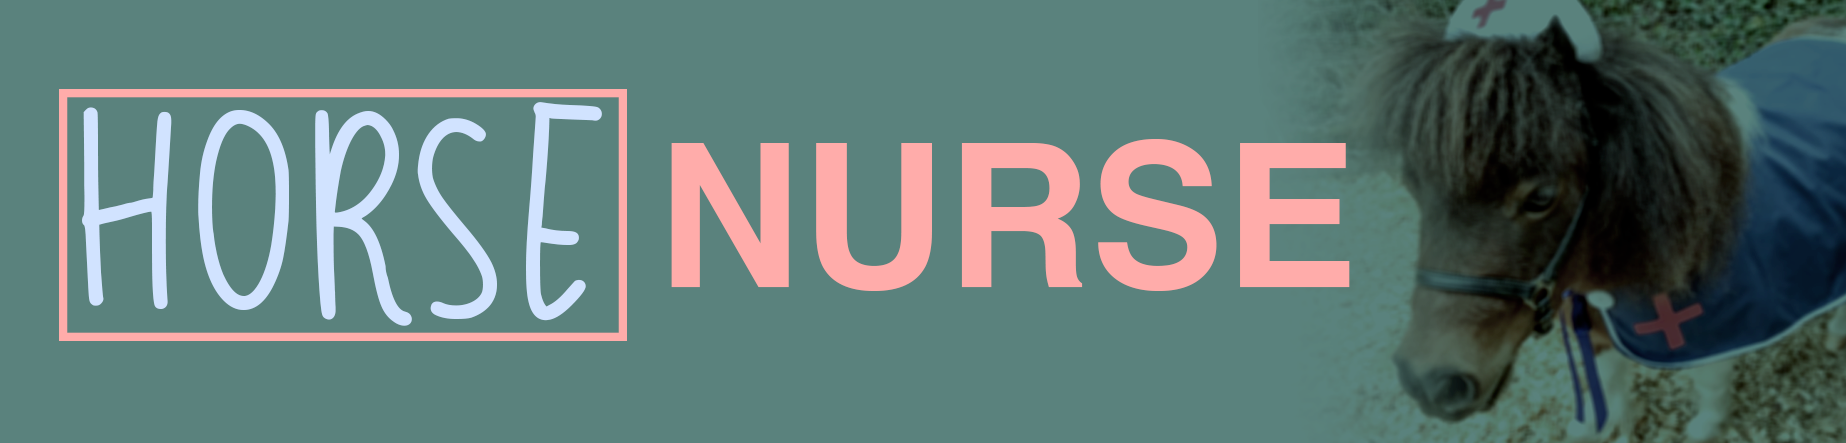 Horse Nurse